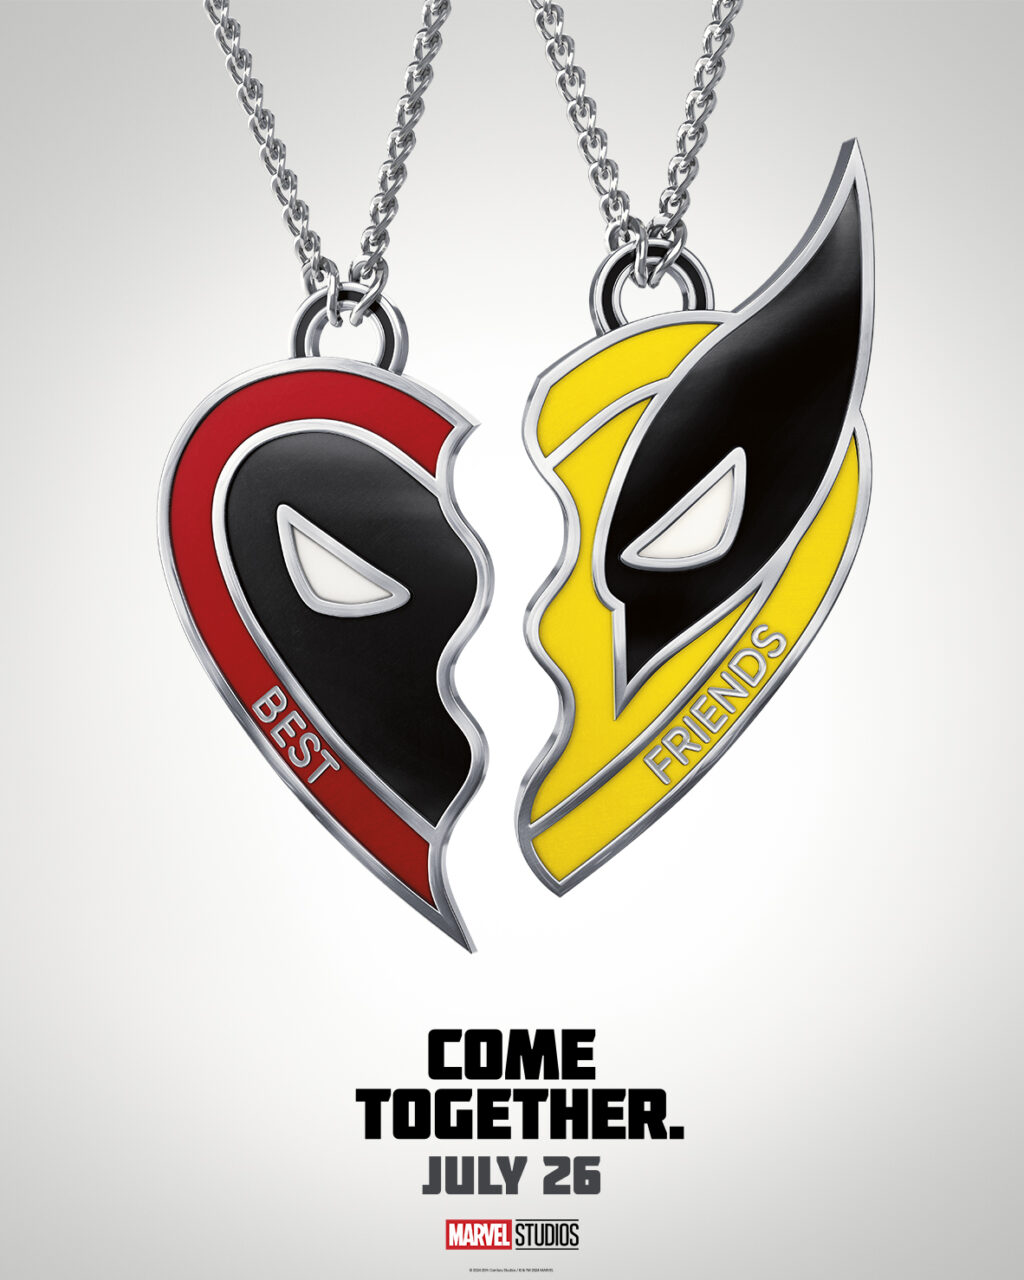 Deadpool & Wolverine poster (Marvel Studios/Disney)